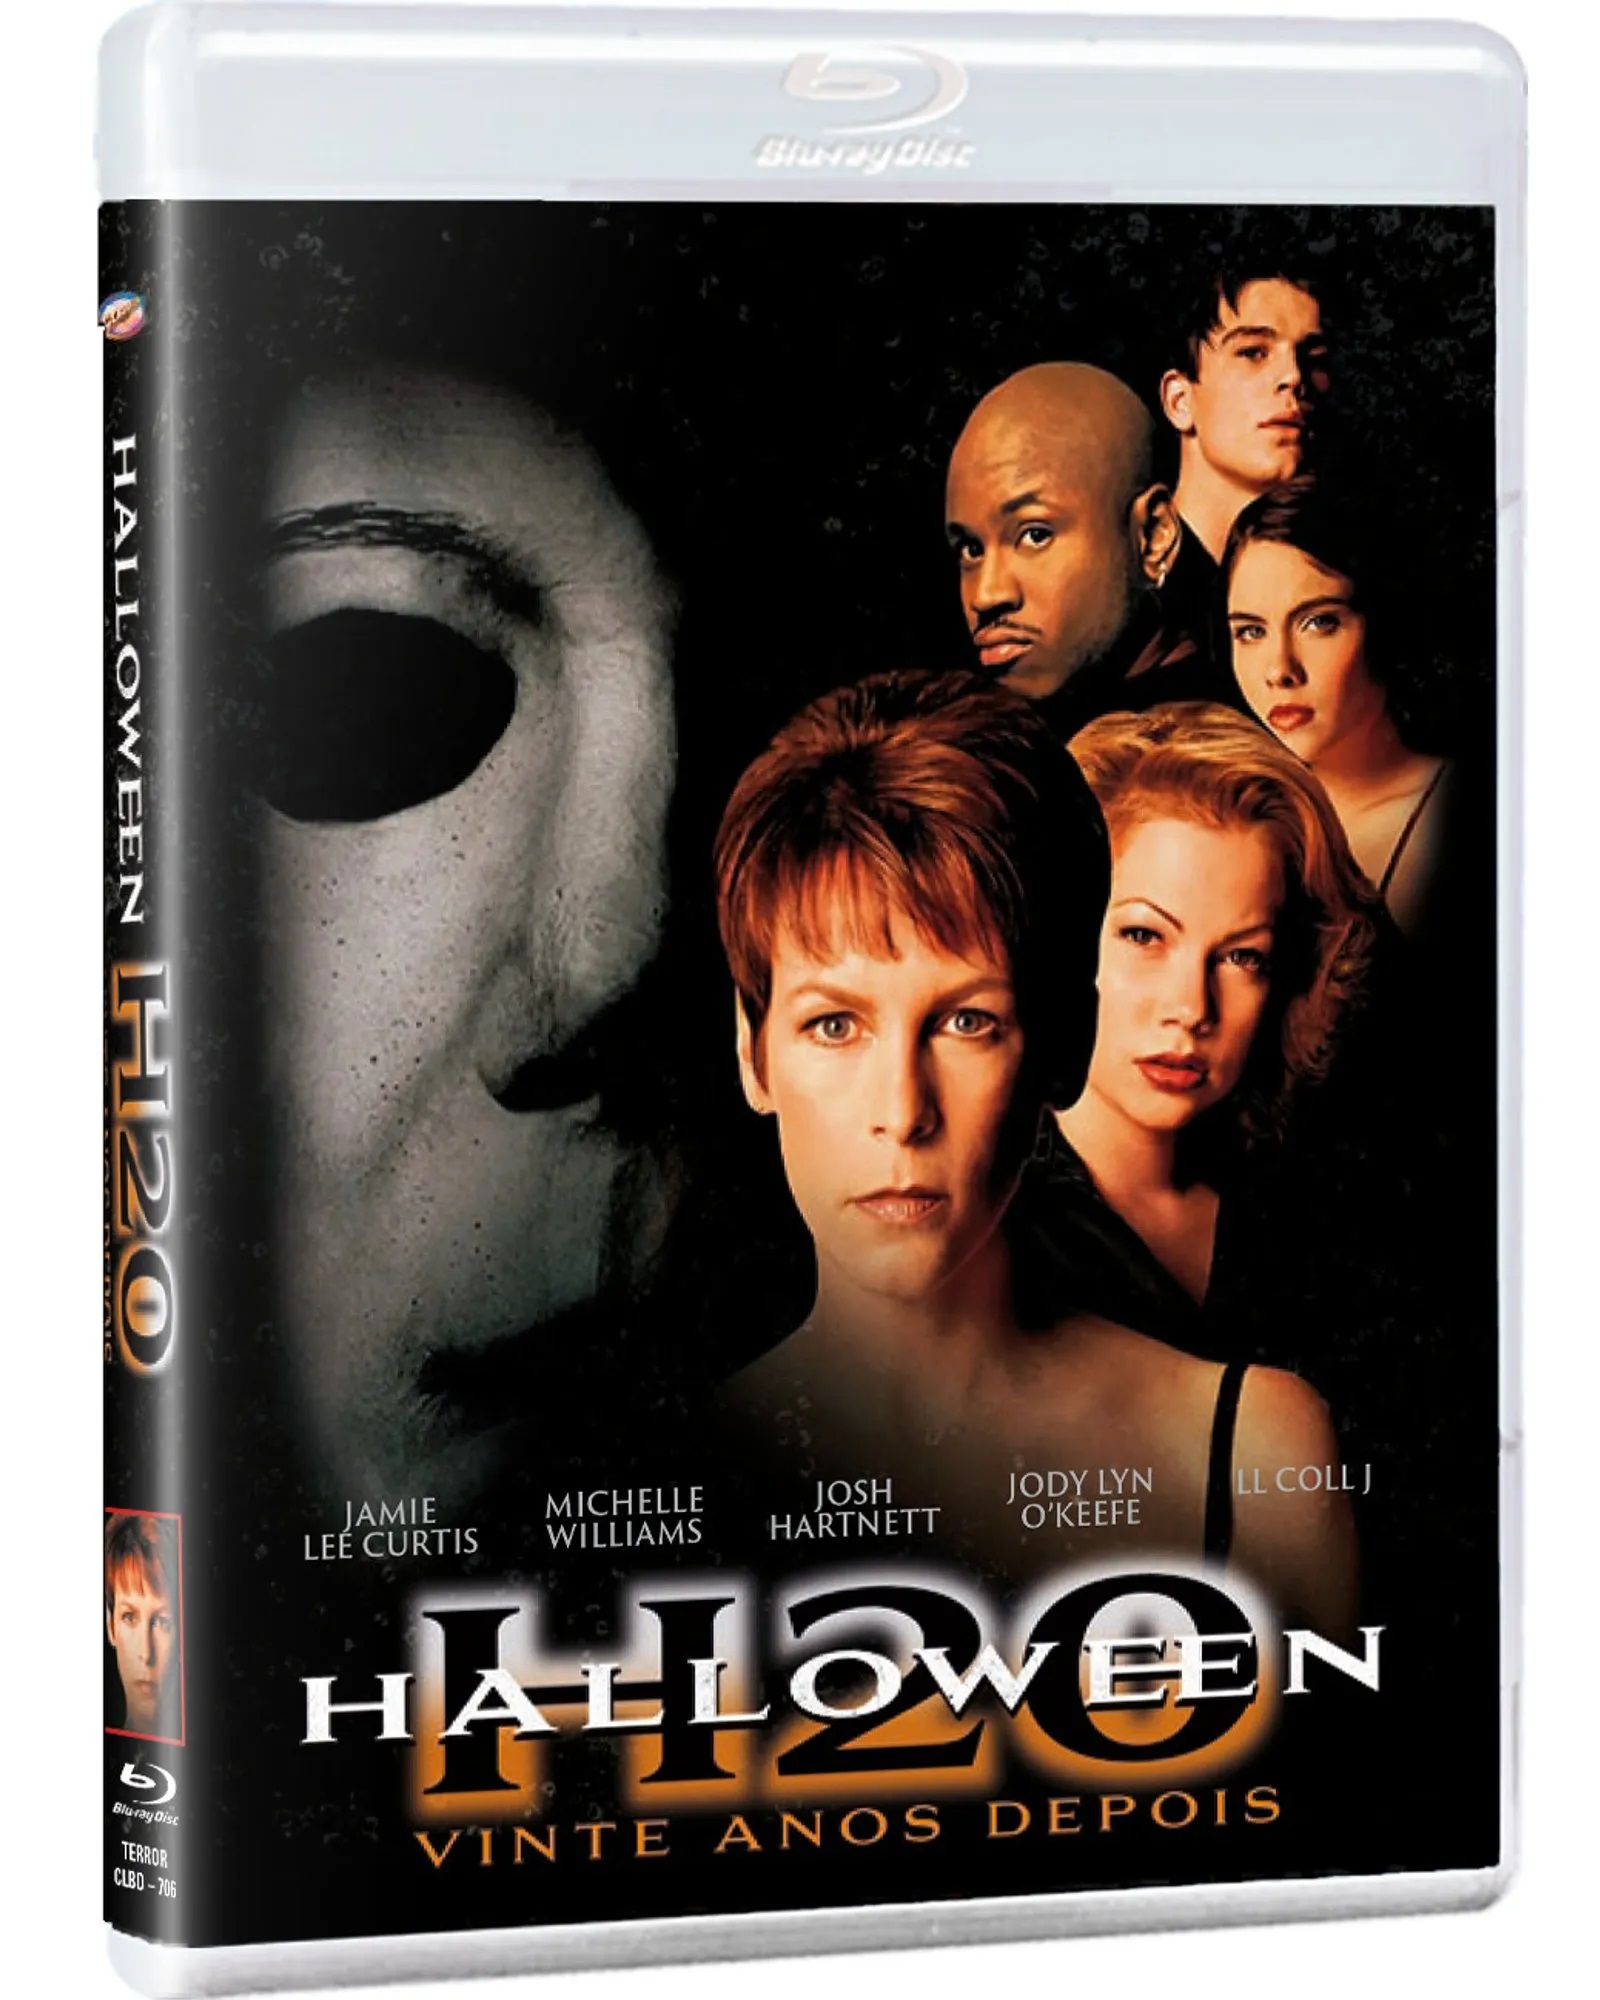 HALLOWEEN O INÍCIO (2007) - BD + DVD - Colecione Clássicos